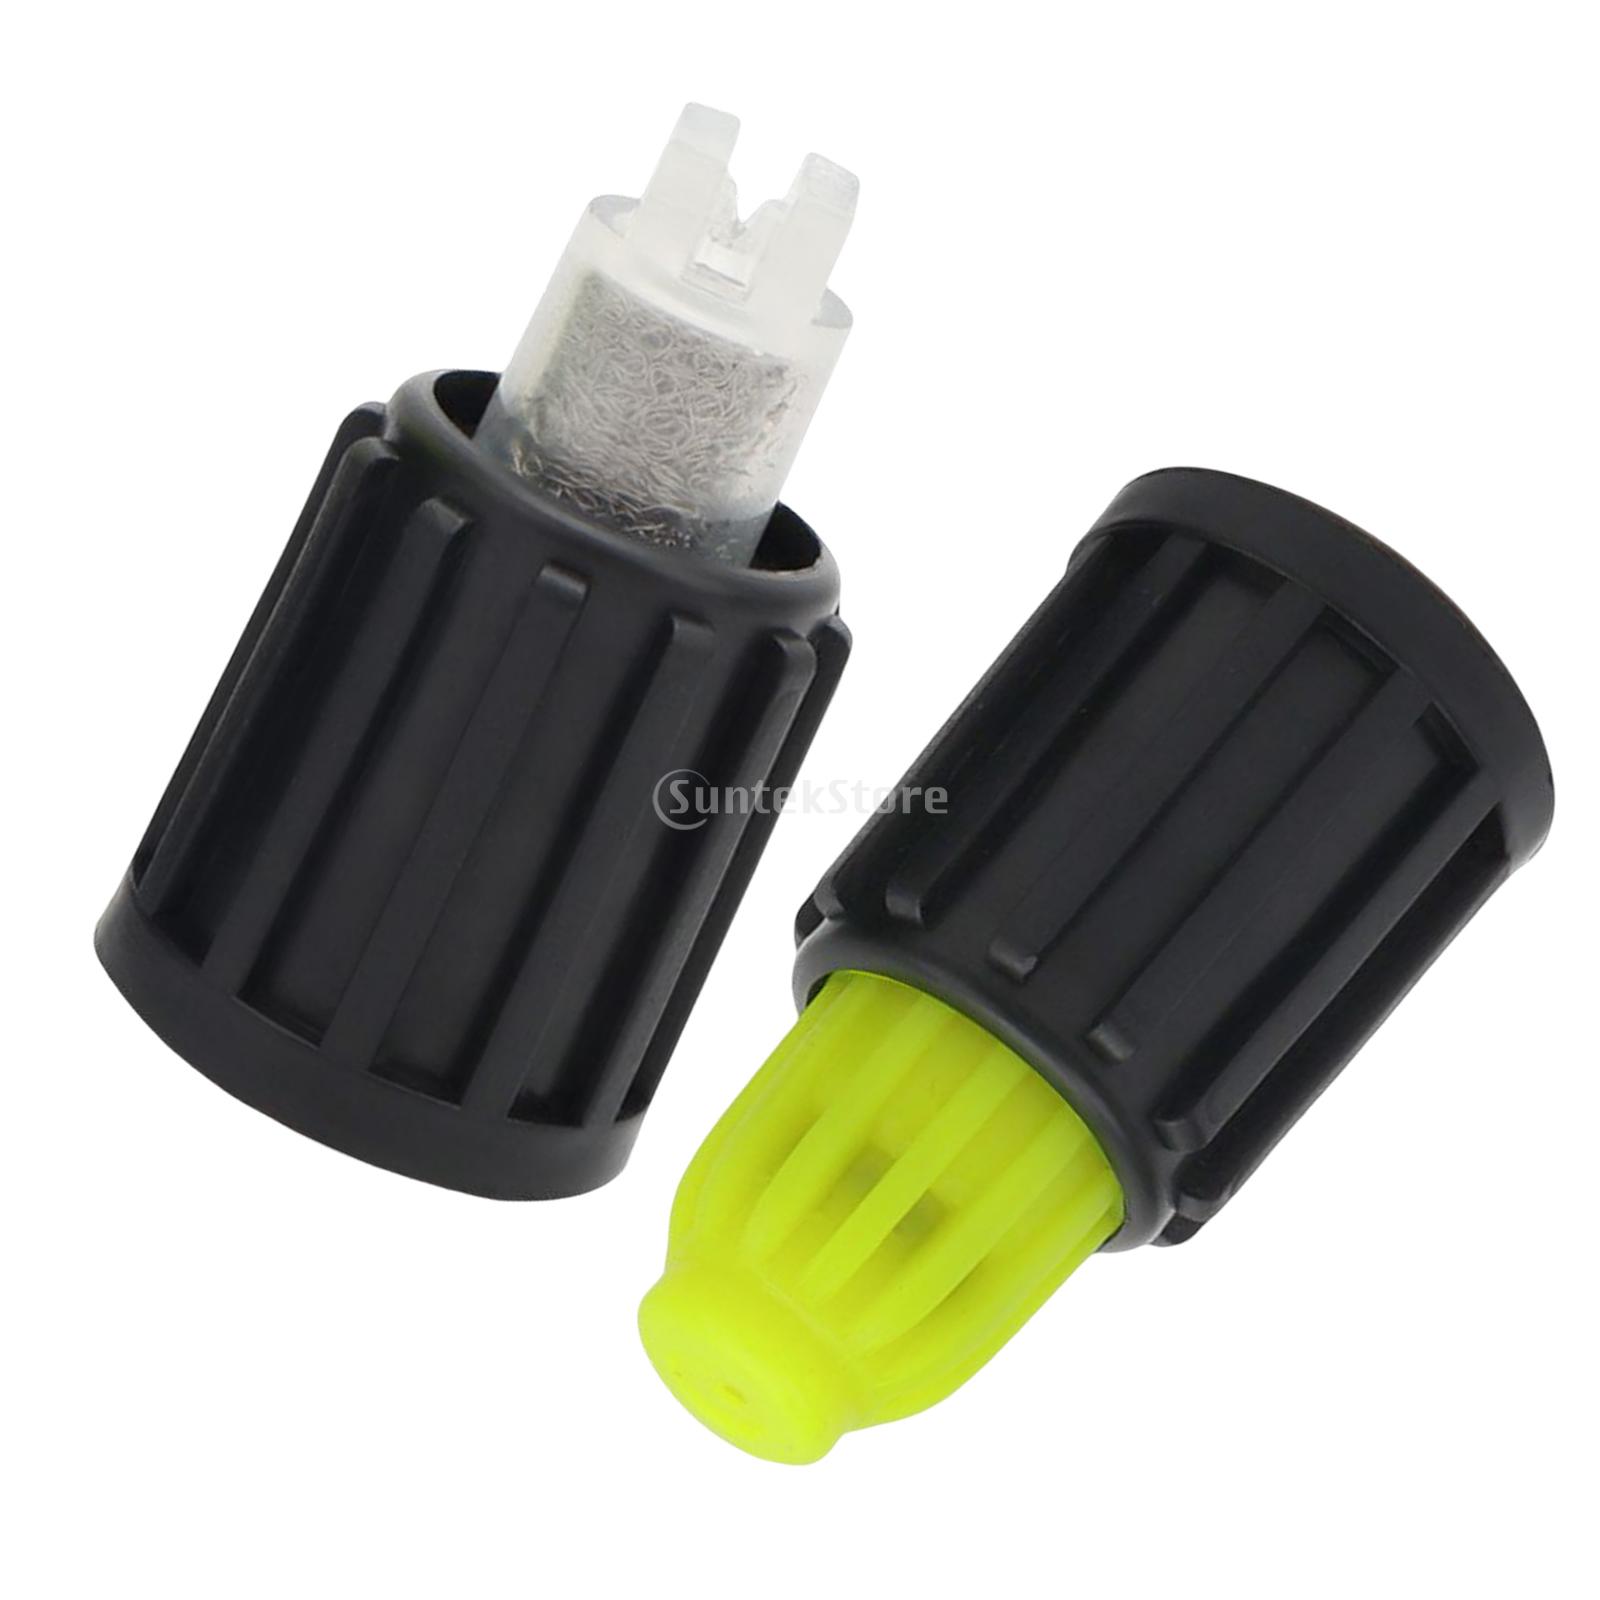 Manual High Pressure Air Pump Sprayer Adjustable Drink Bottle Spray Head Nozzle for Garden Lawn Care Foam Nozzle